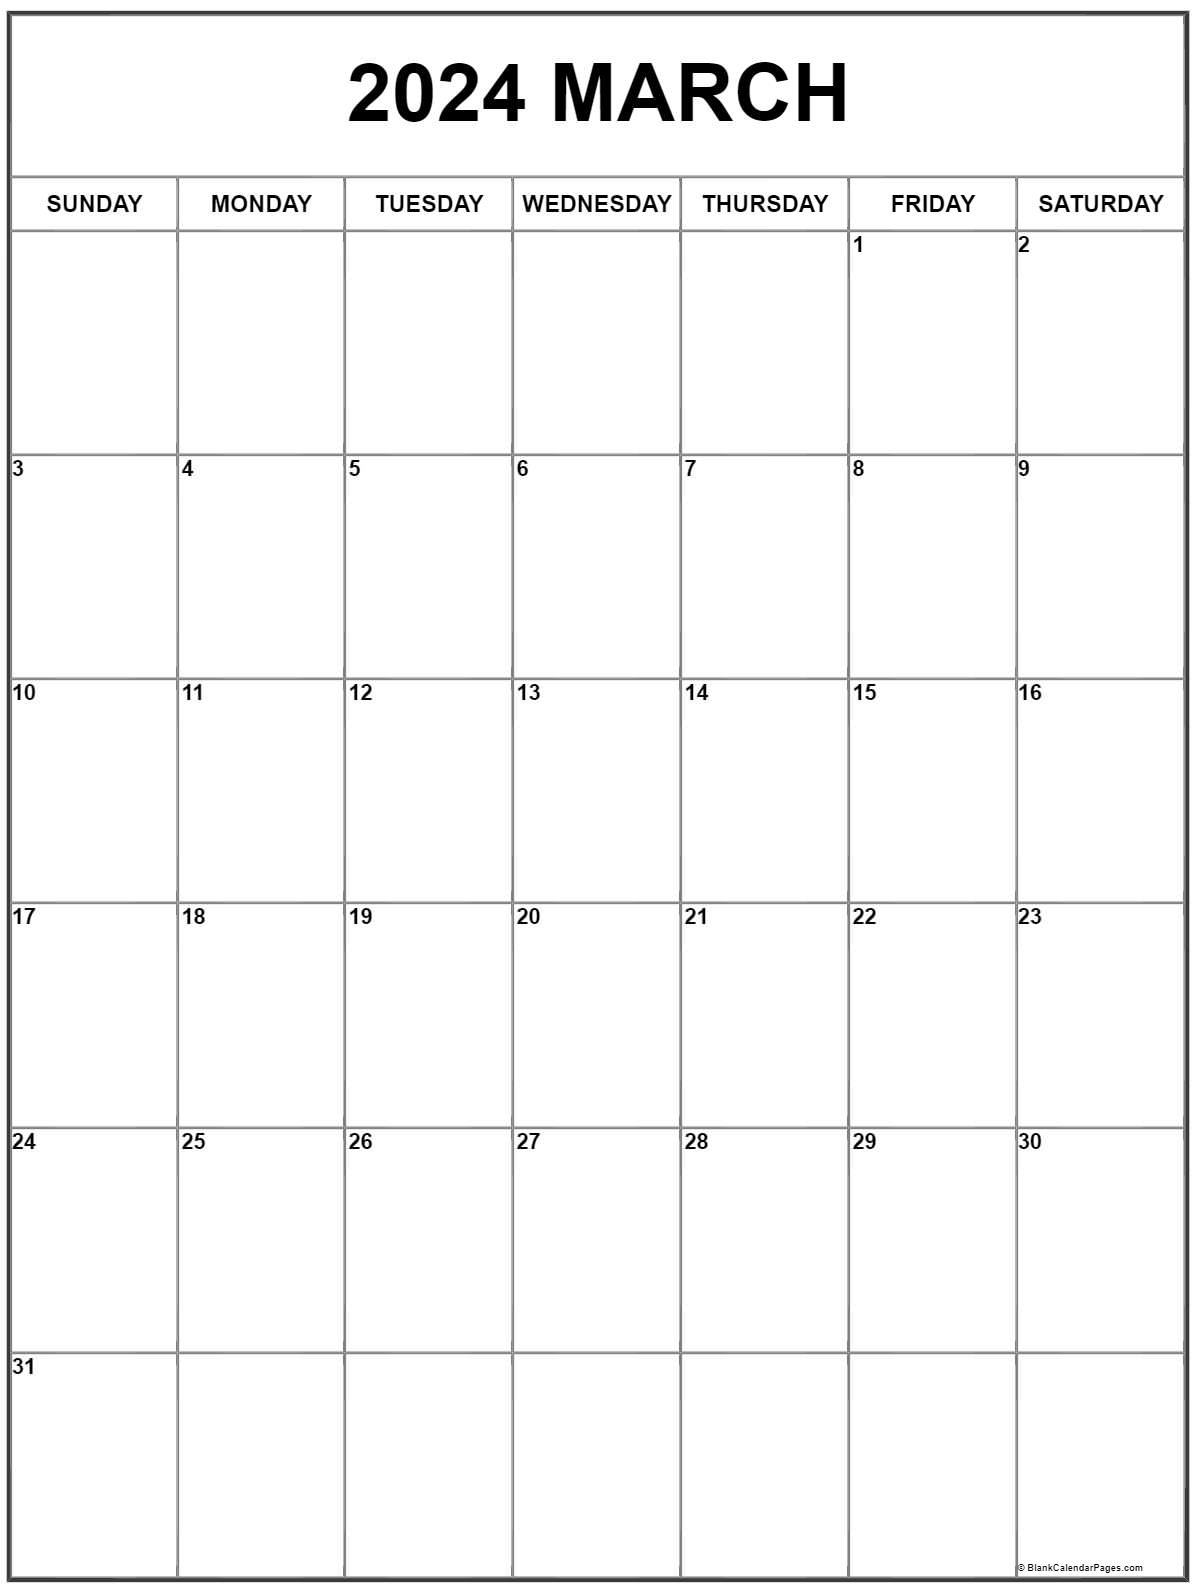 March 2024 Vertical Calendar | Portrait for March 2024 Calendar Printable Vertical